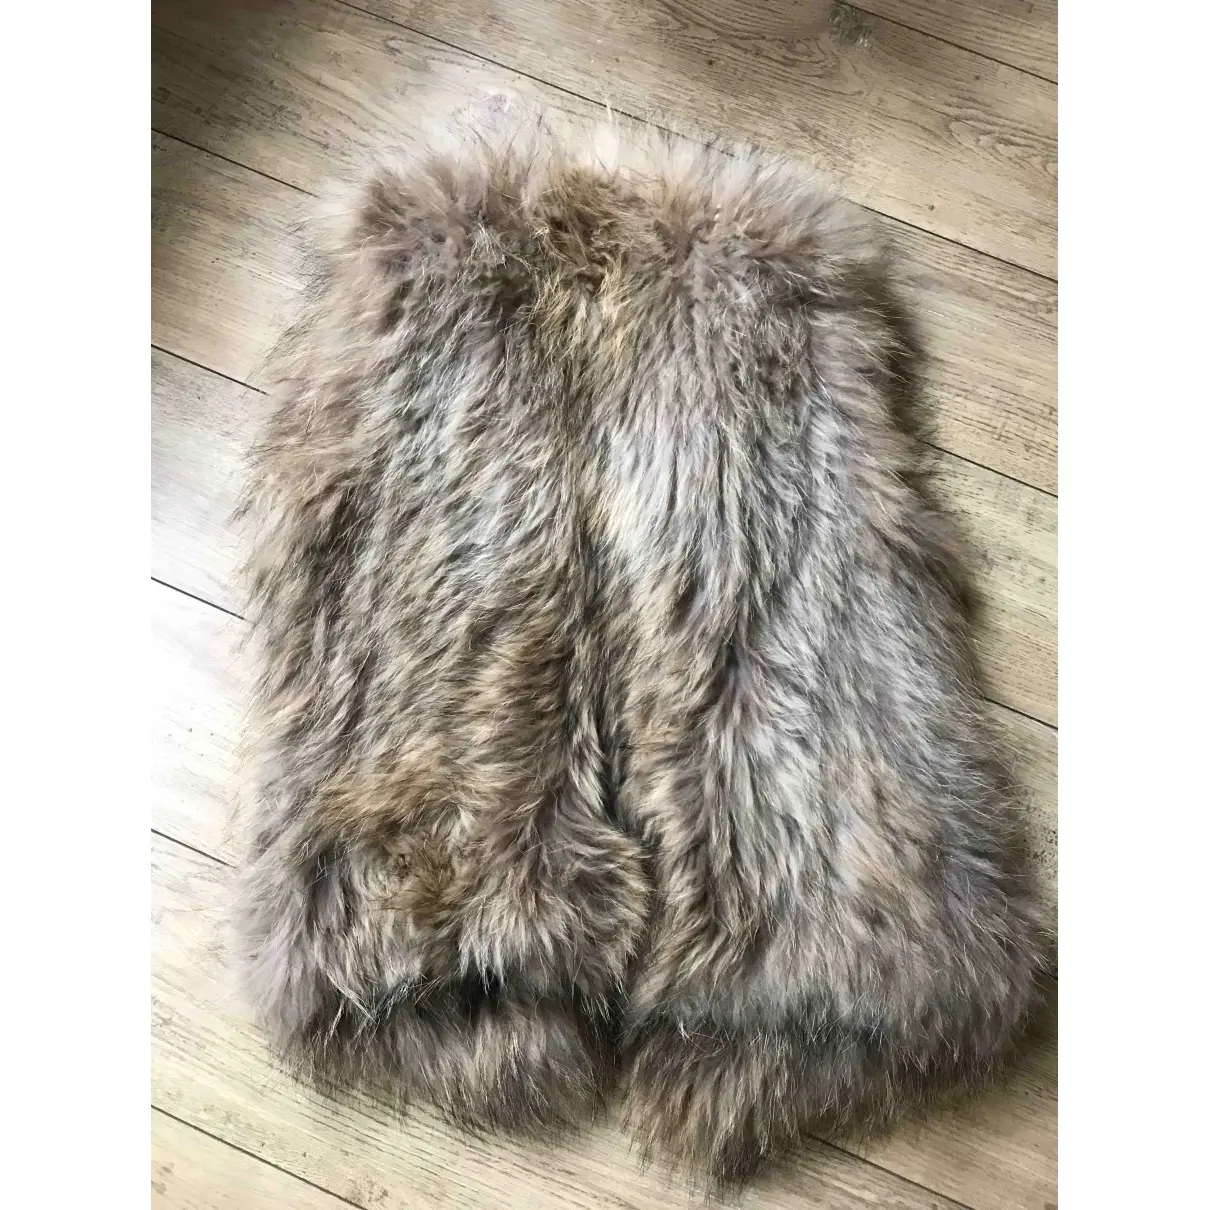 Meteo Cardi coat for sale